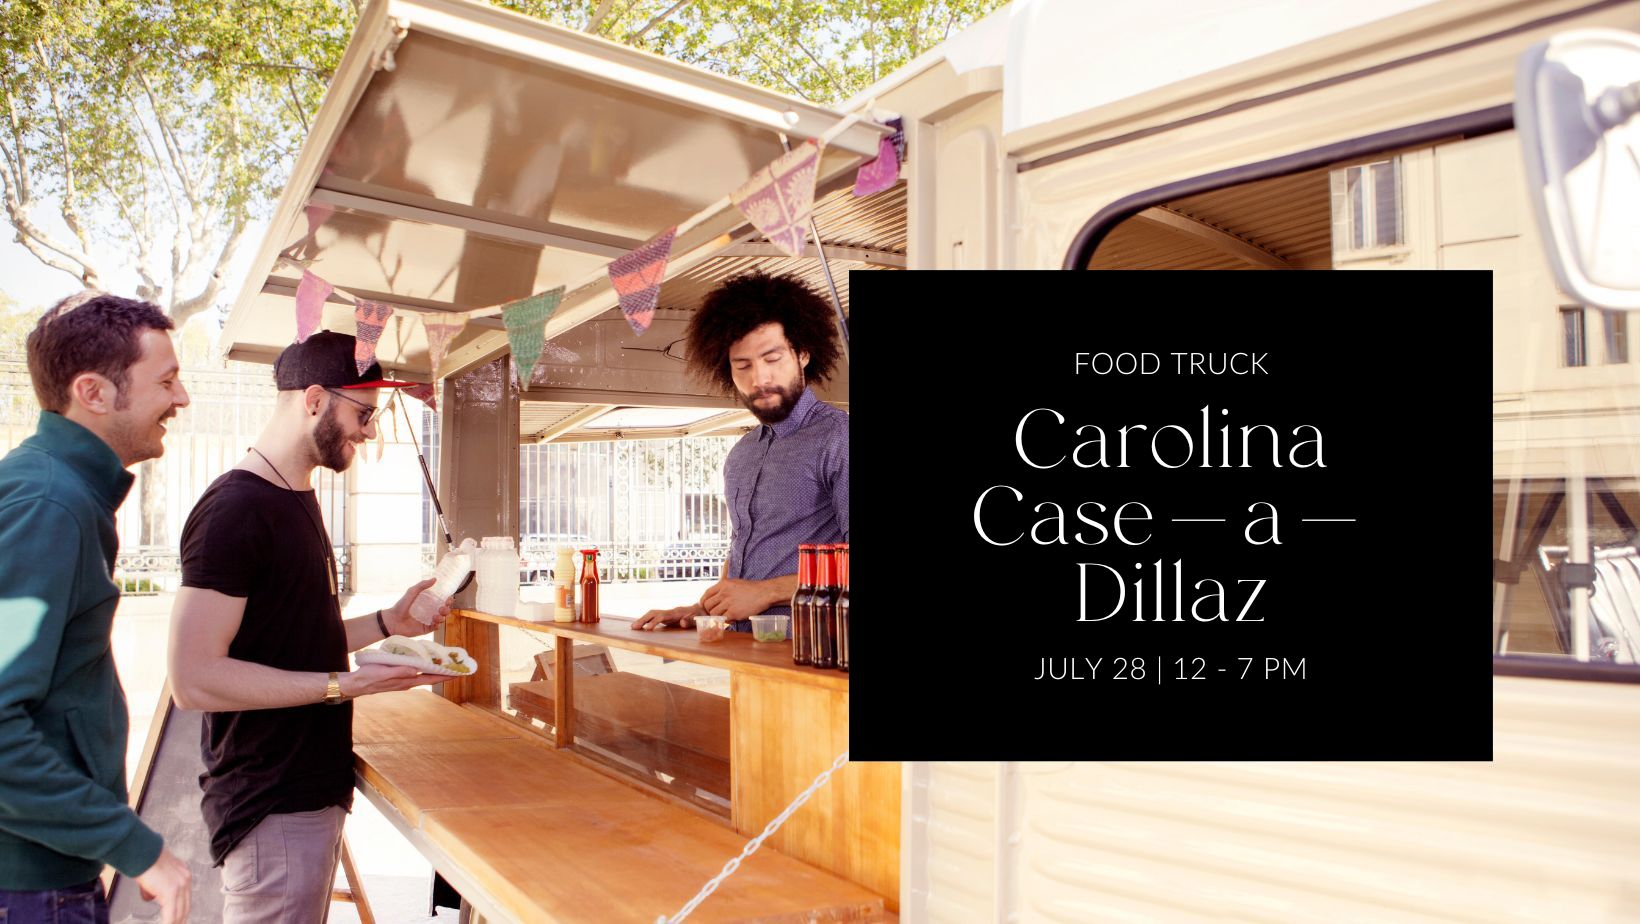 Food Truck: Carolina Case-a-Dillaz